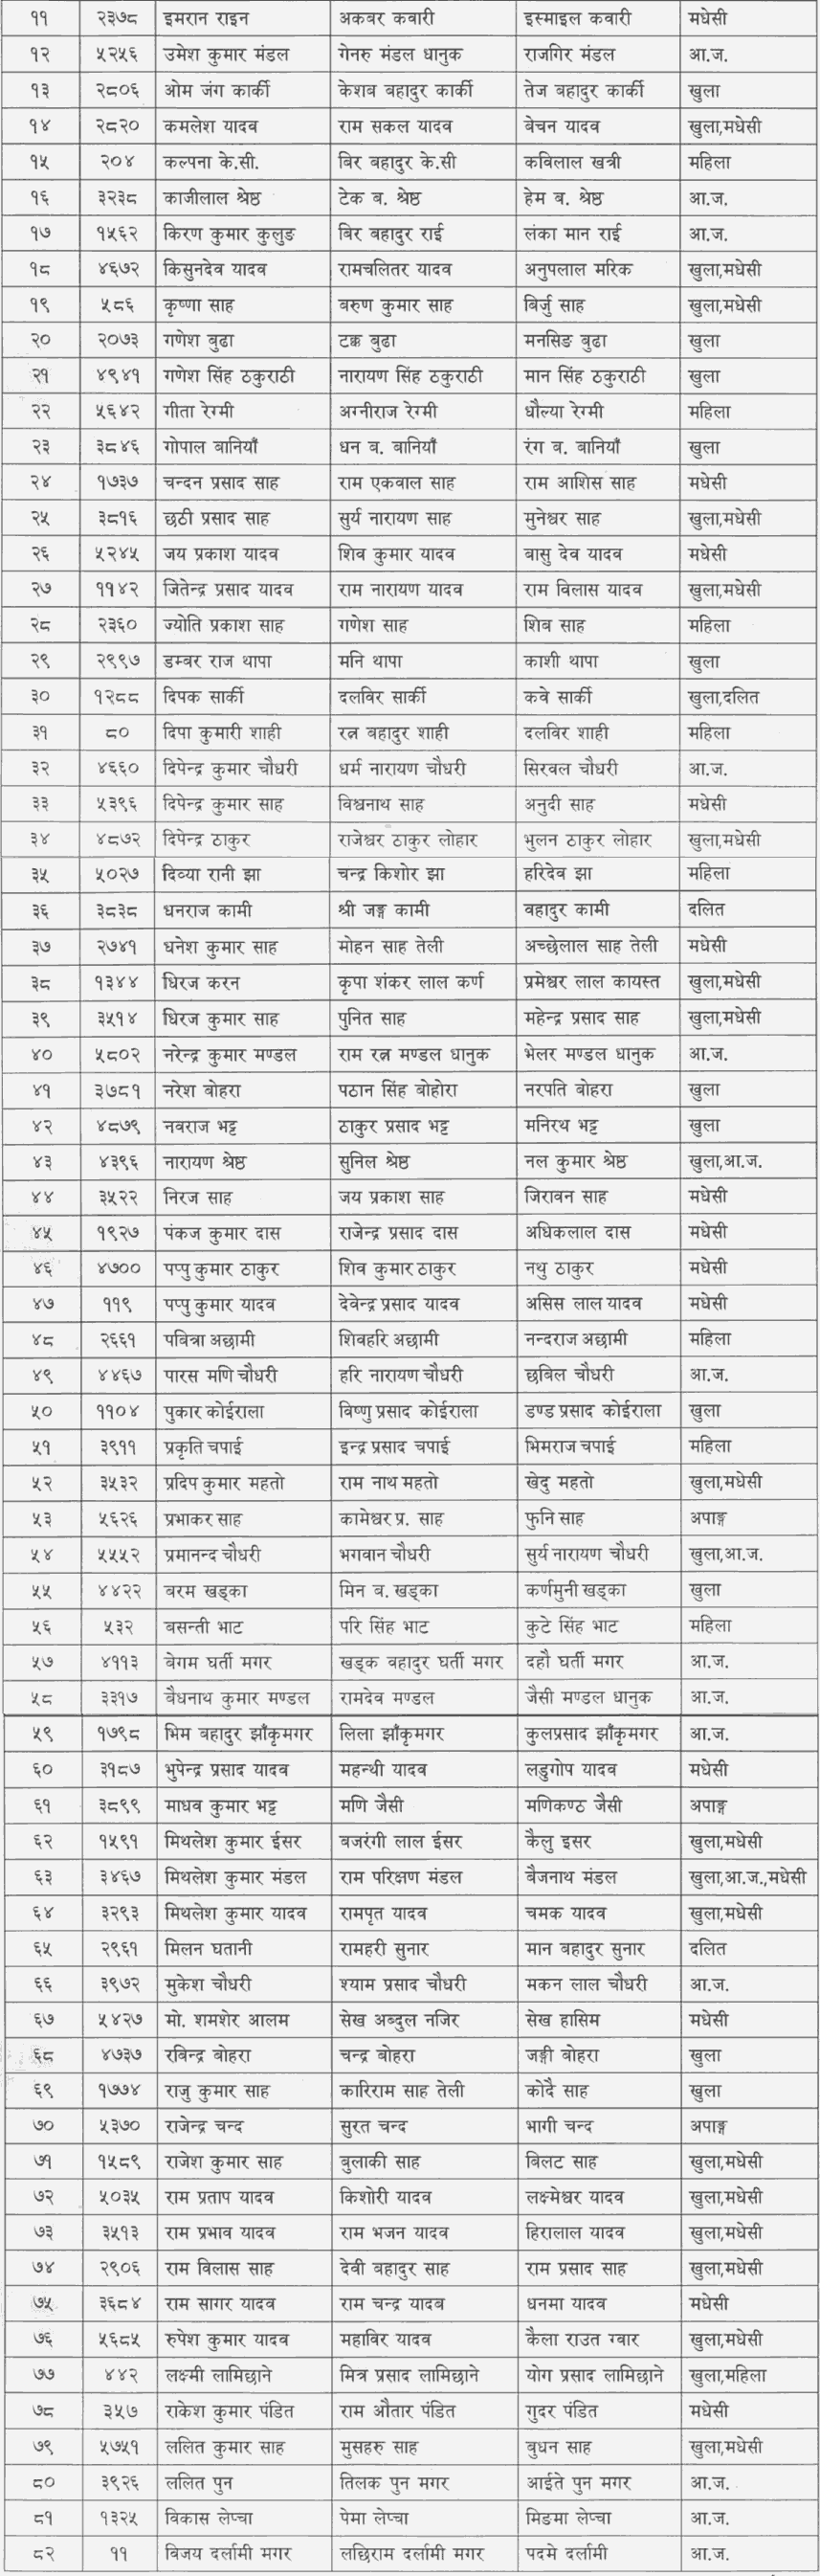 Bagmati Pradesh Lok Sewa Aayog Published Result of 4th Level Assistant Sub Engineer